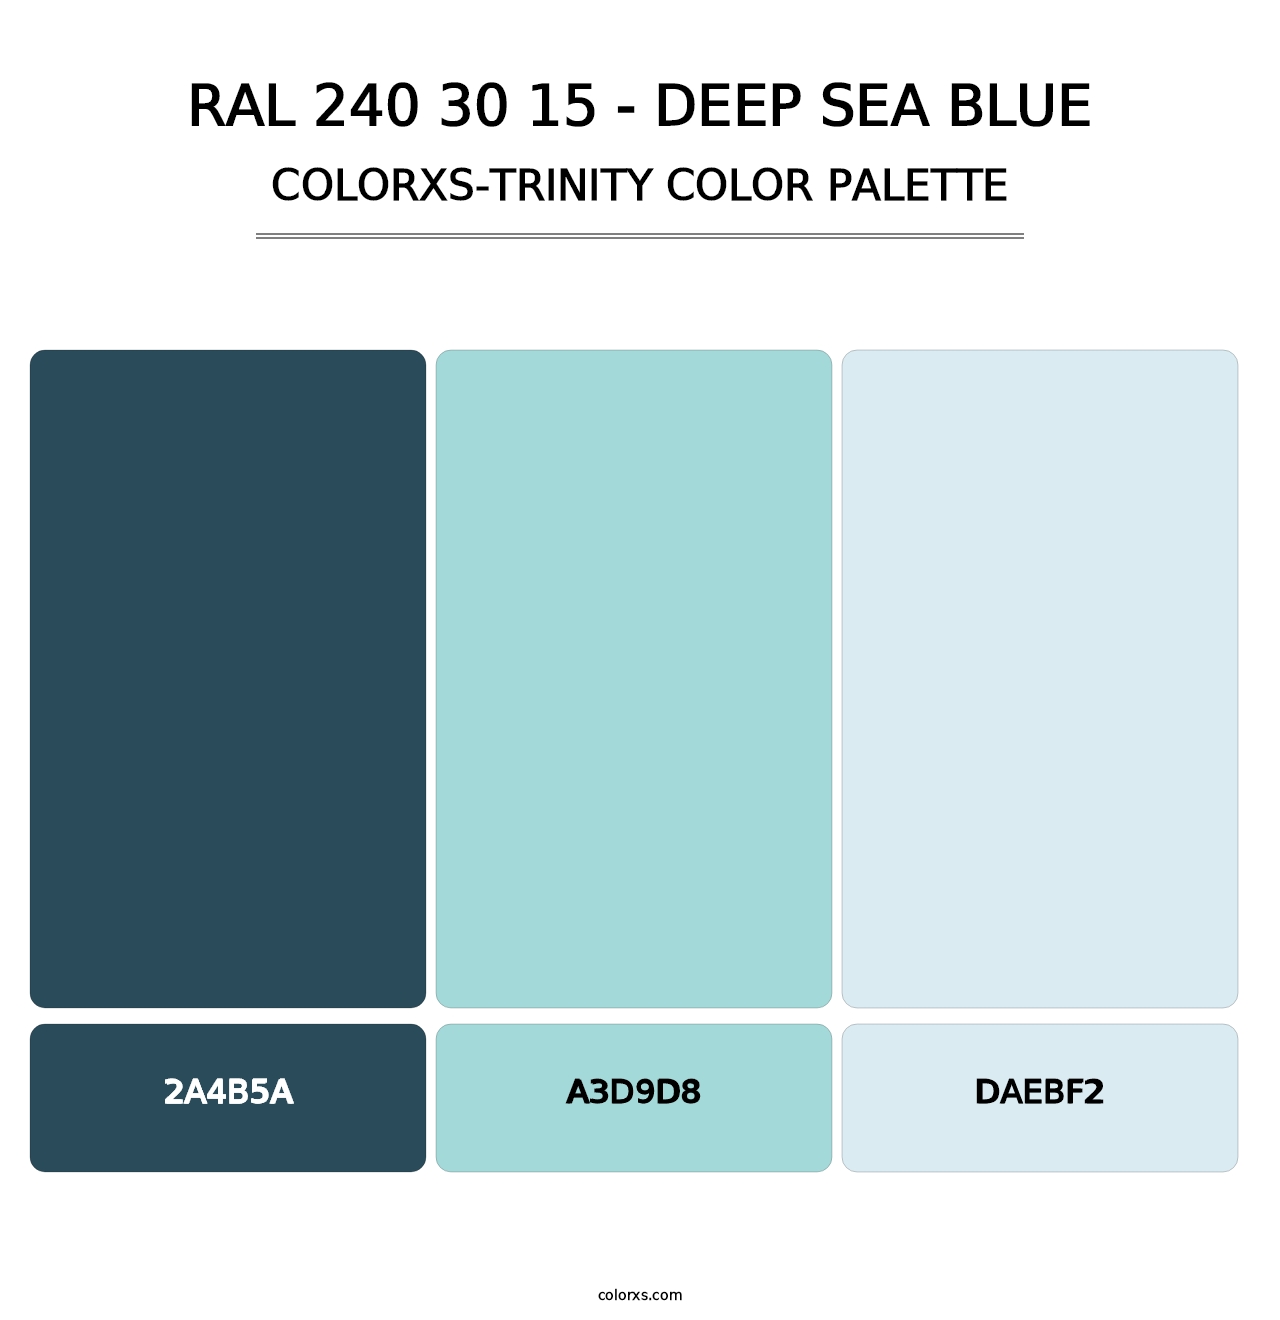 RAL 240 30 15 - Deep Sea Blue - Colorxs Trinity Palette